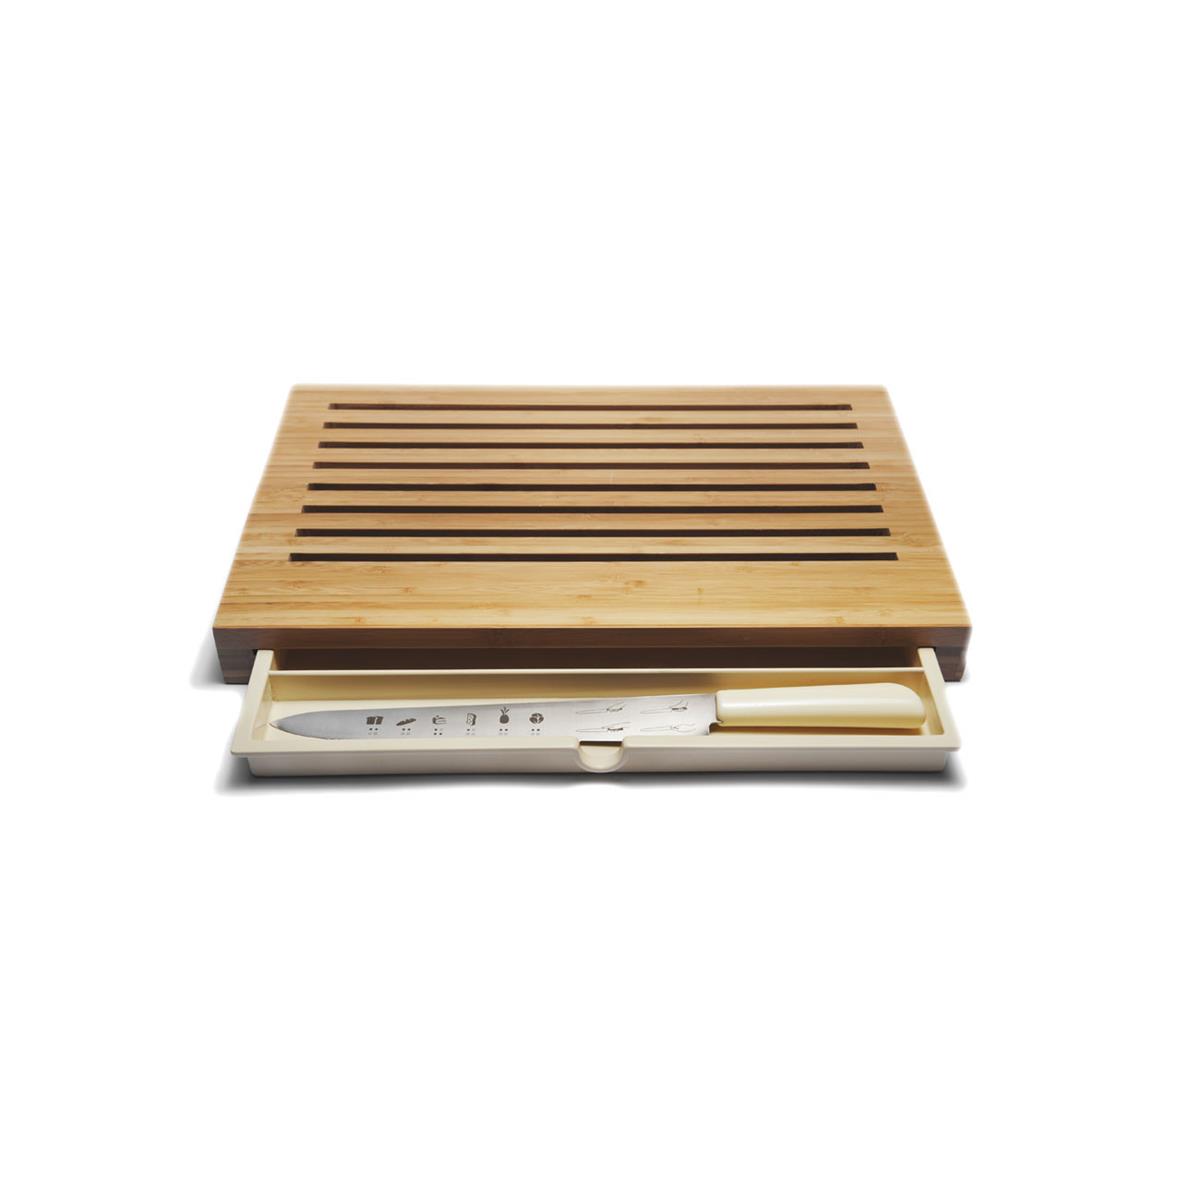 Alessi-Sbriciola Pan Board en madera de bambÃº con coleccionista de resina